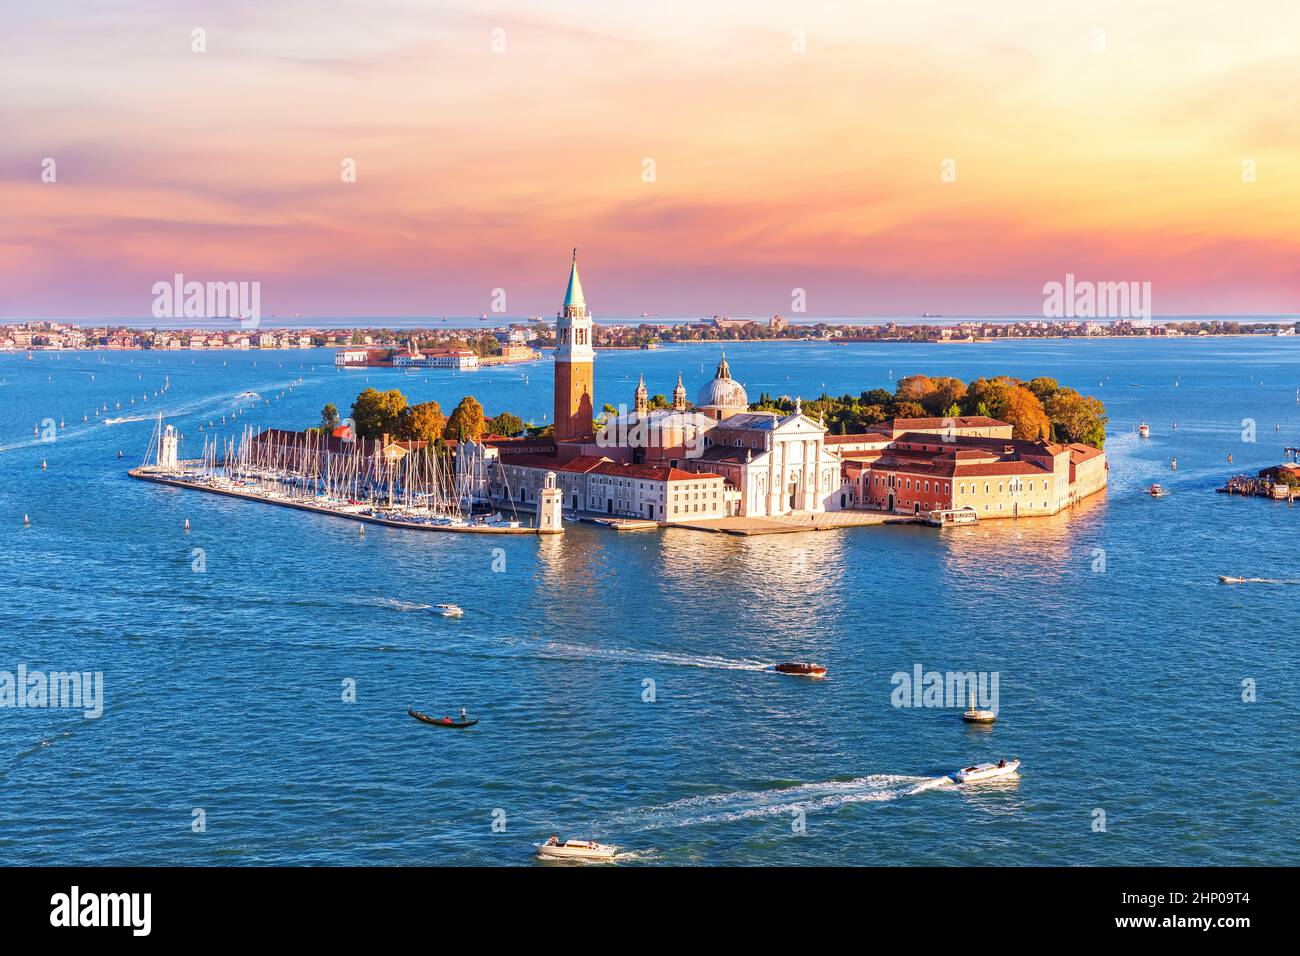 Famous San Giorgio Maggiore island of Venice, beautiful sunset view, Italy. Stock Photo